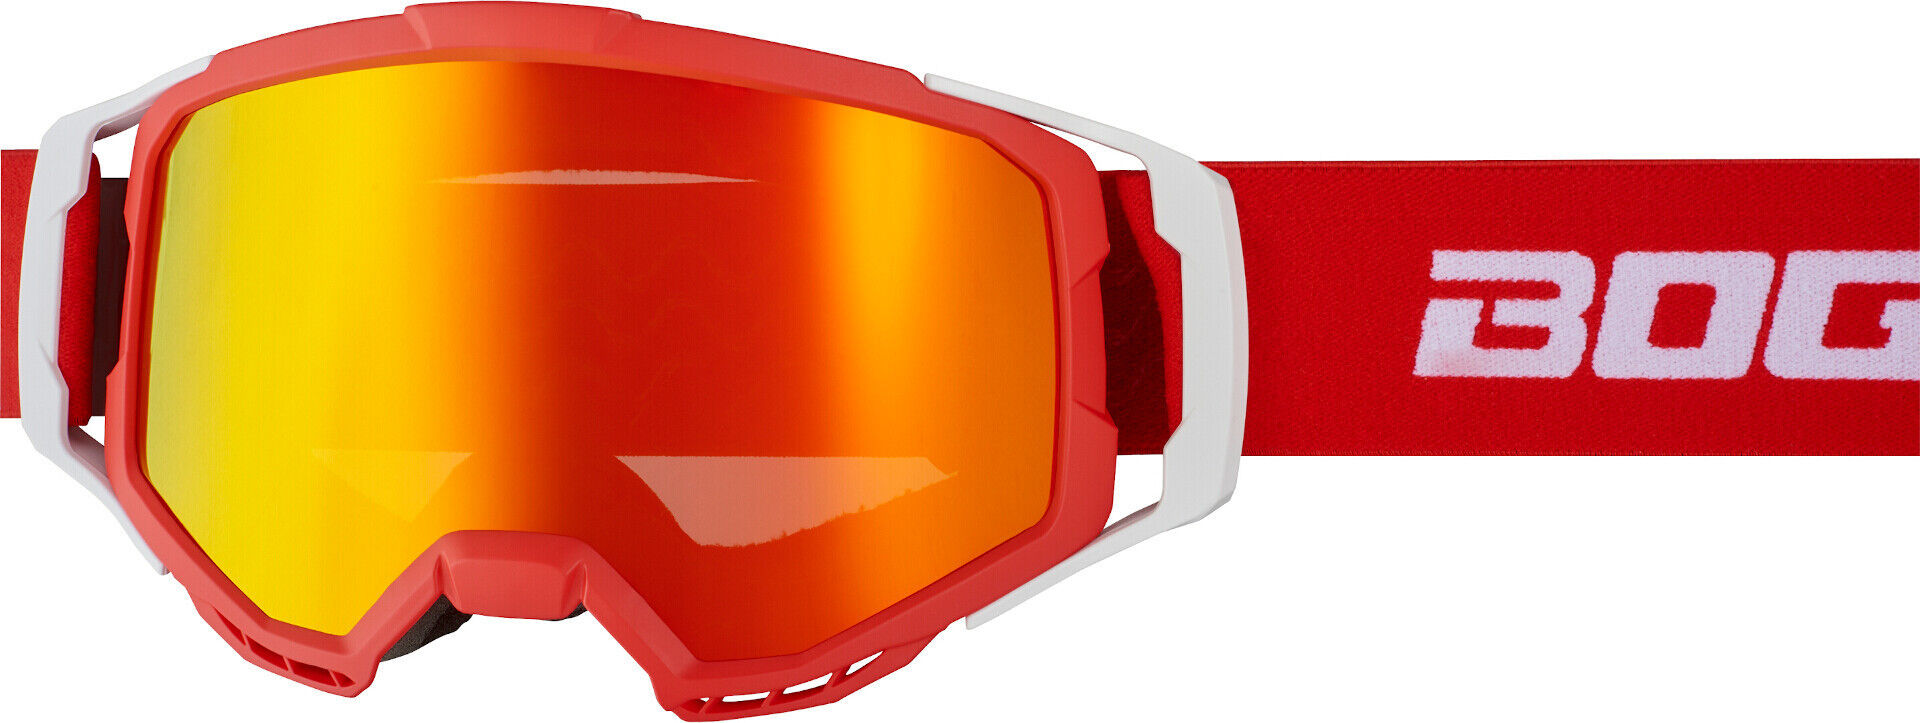 Bogotto B-1 Gafas de motocross - Blanco Rojo (un tamaño)